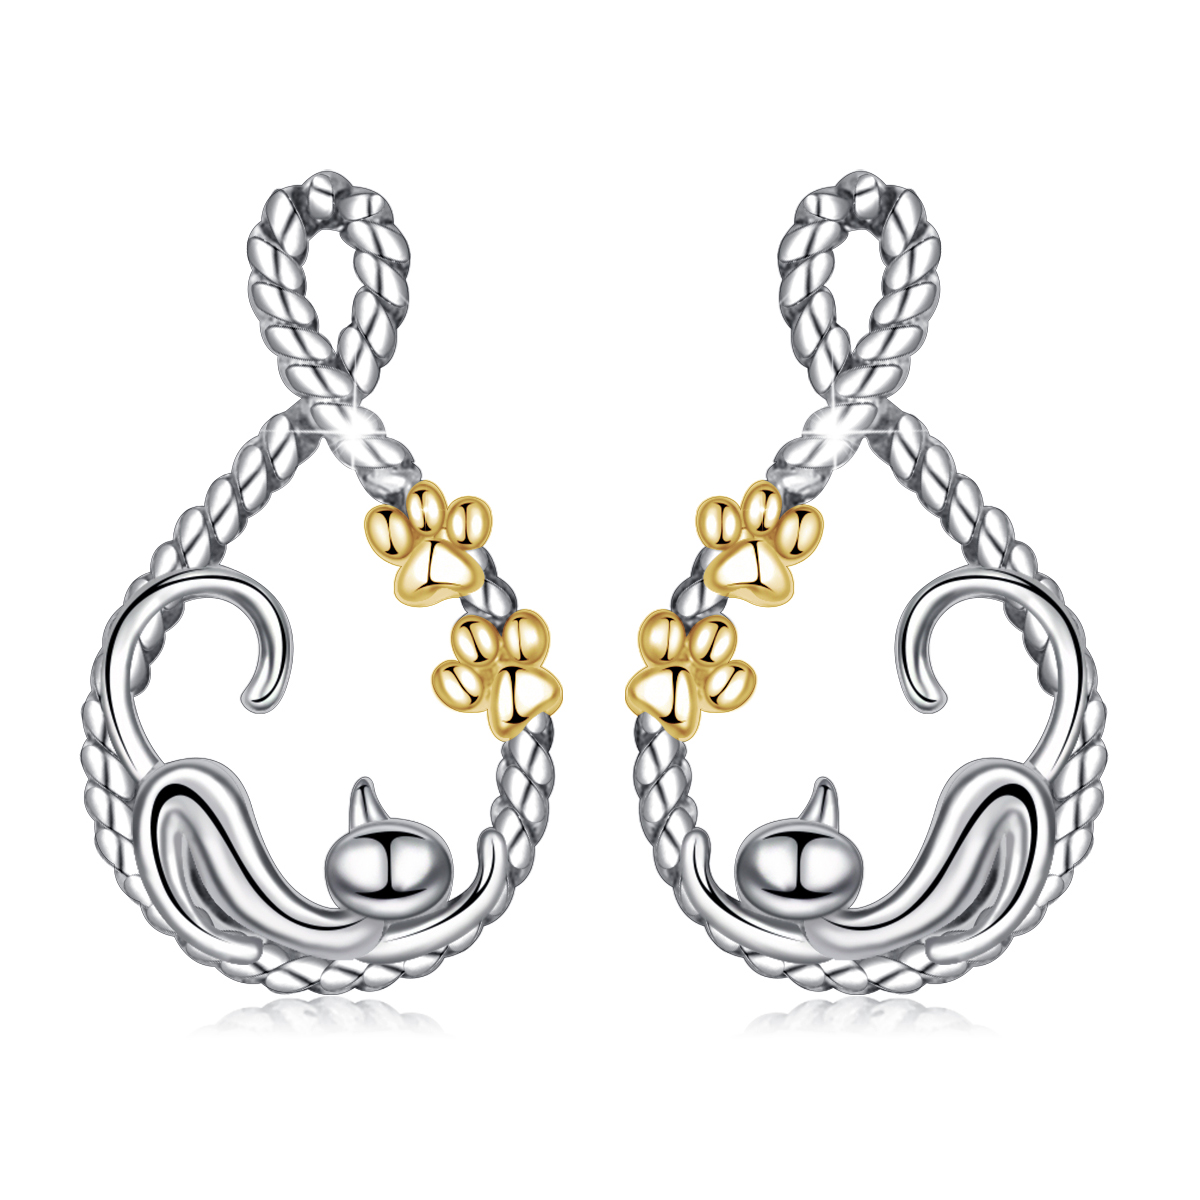 Merryshine brand cute cat paws 925 sterling silver jewelry stud earrings